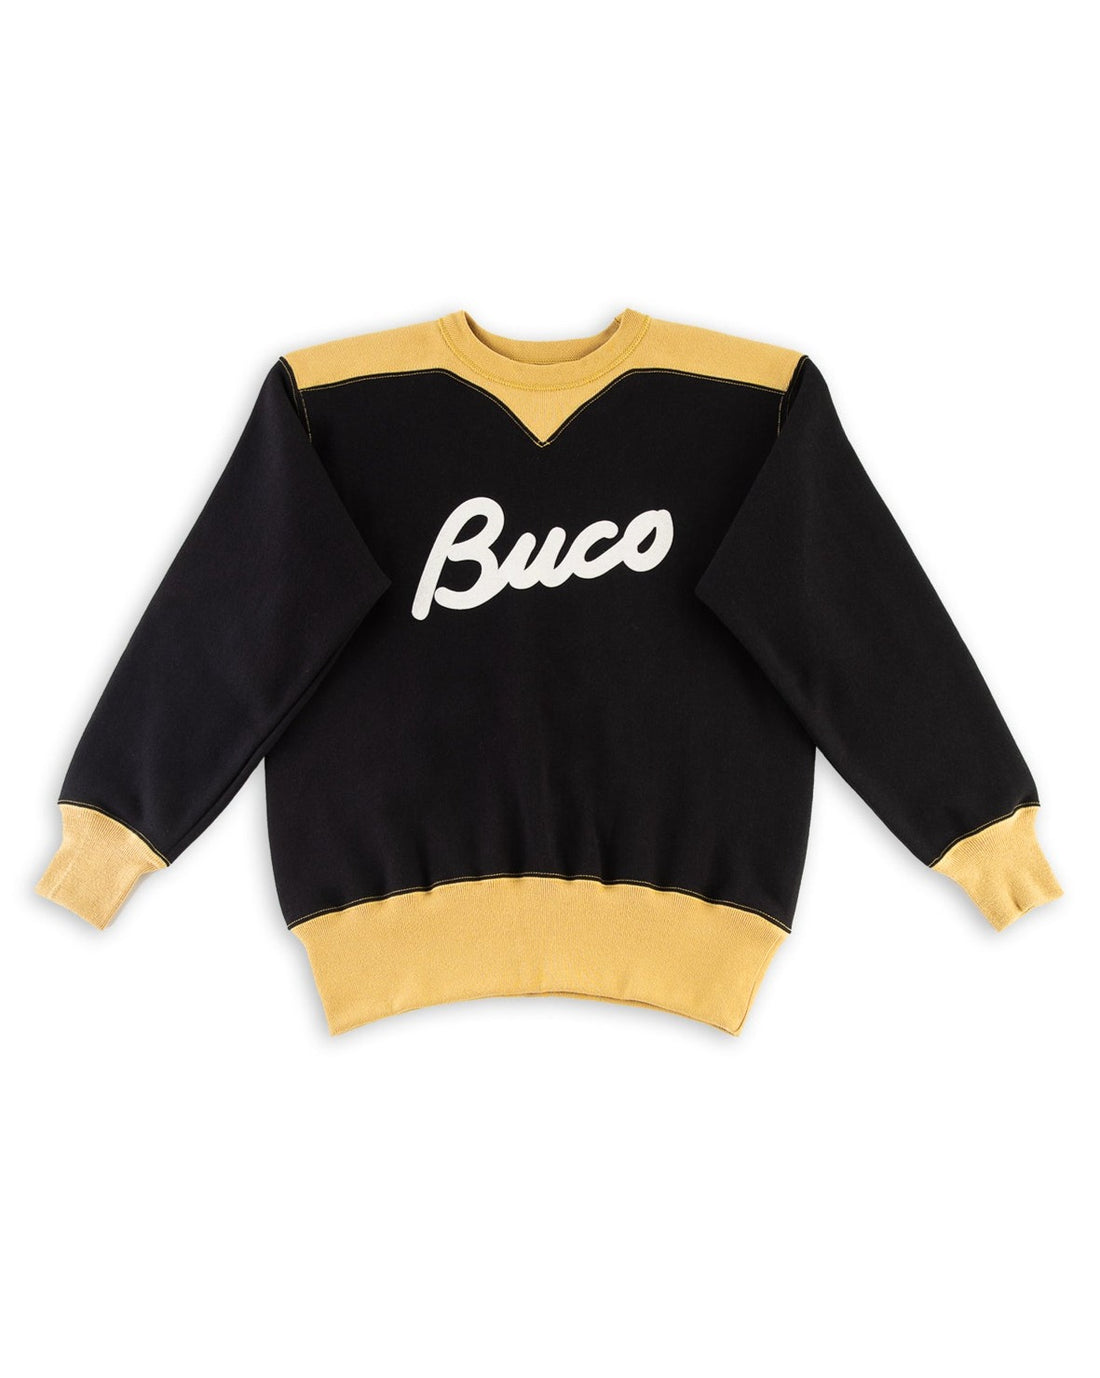 The Real McCoy's Buco Two-Tone Sweatshirt / Buco - Black/Corn - Standard & Strange